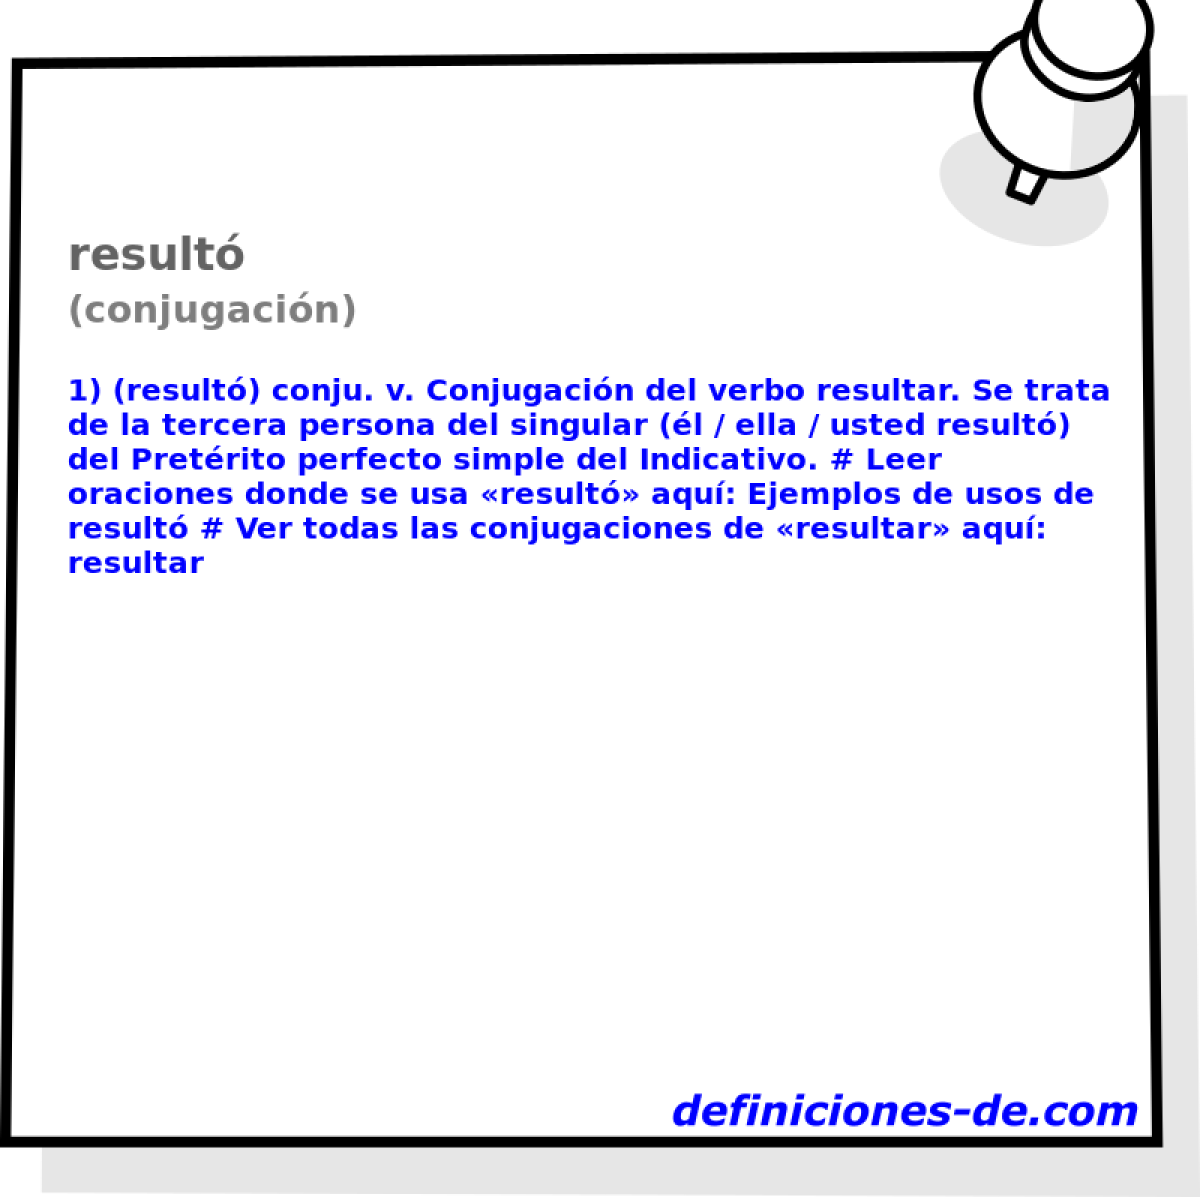 result (conjugacin)